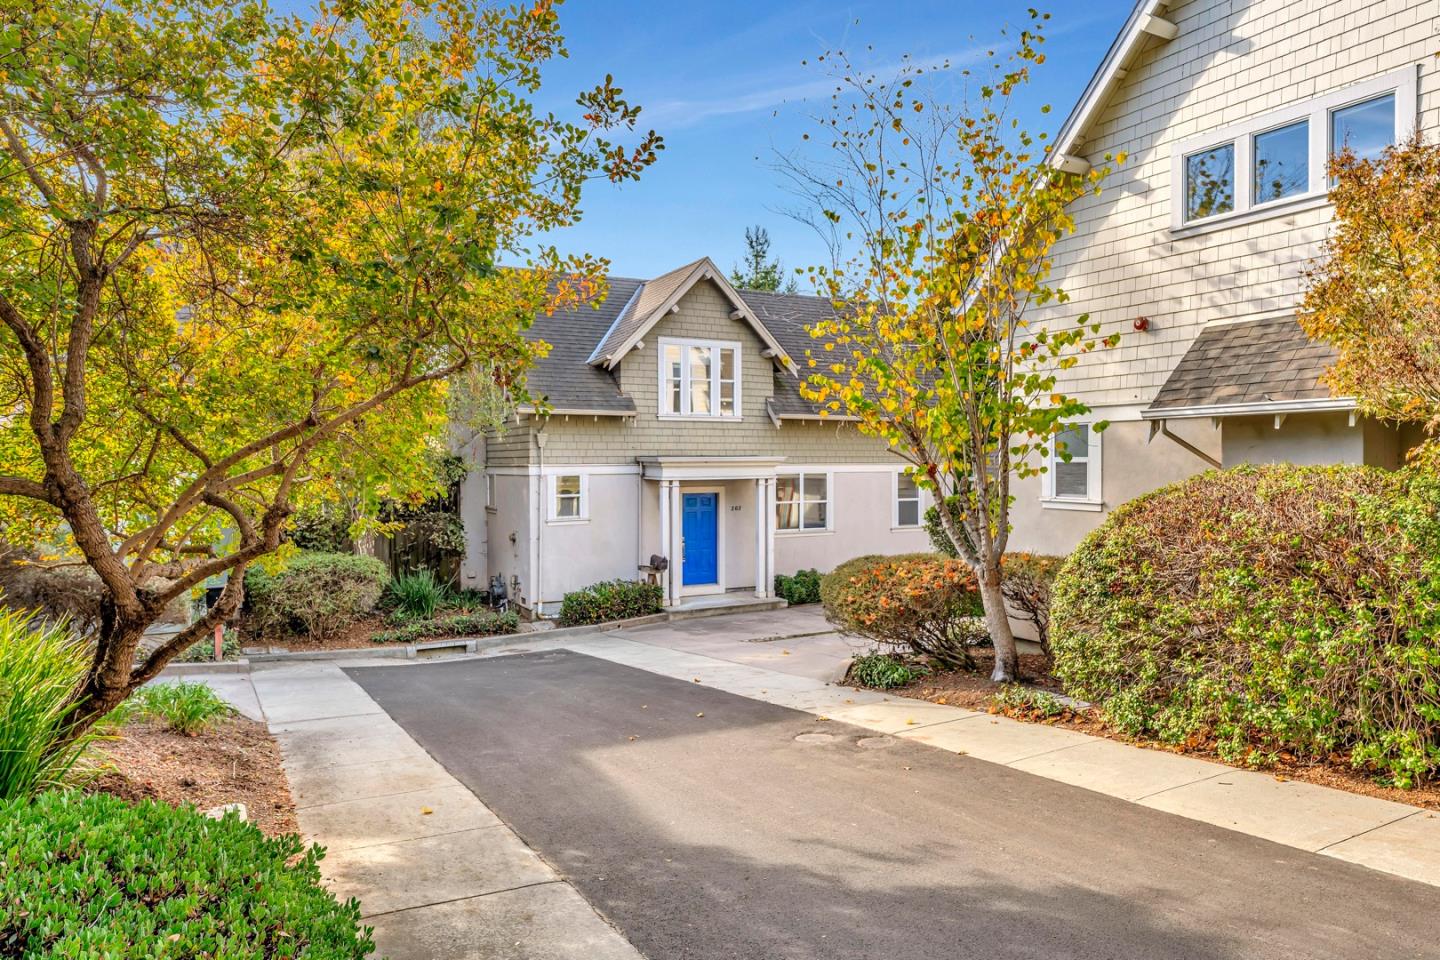 Homes for sale in Santa Cruz | View 202 Roosevelt Terrace | 2 Beds, 1 Bath